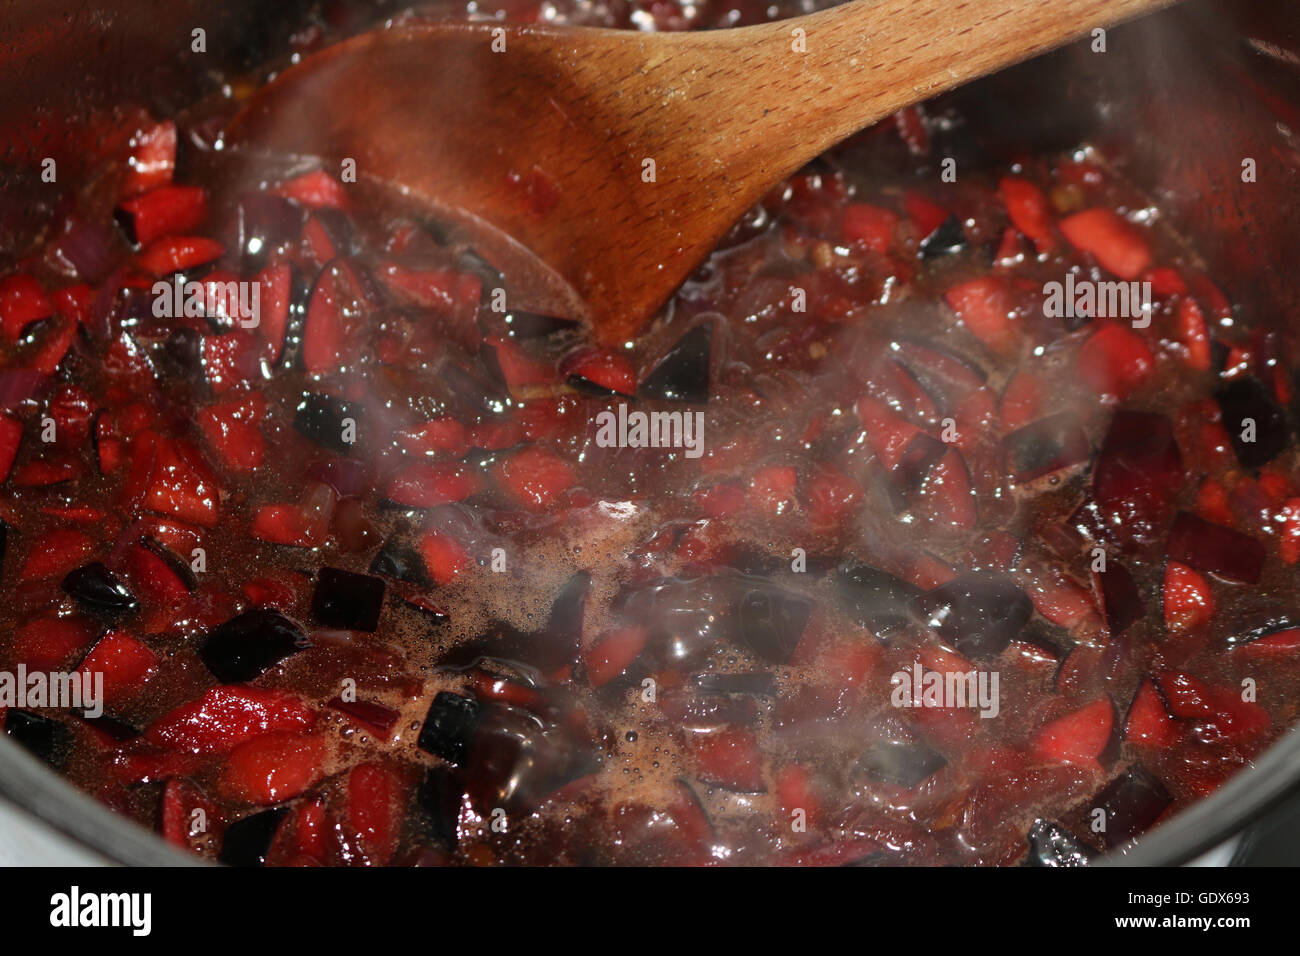 Australian Bush Food, Davidsons Plum diced and being made into Chutney Stock Photo